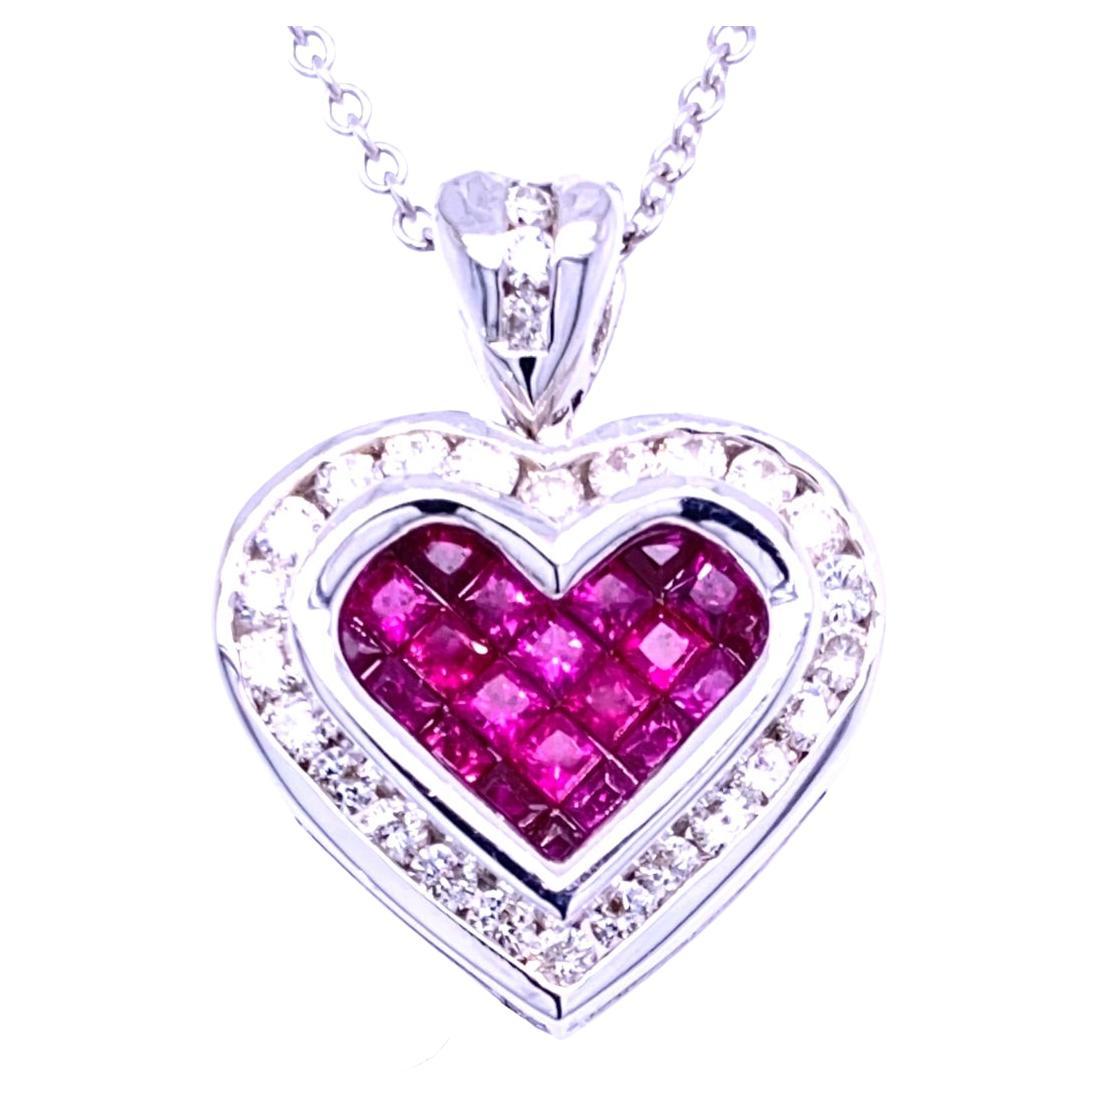 0.51 Carat Diamond/1.05 Carat Ruby 18 Karat Gold Hearts Pendant Necklace For Sale